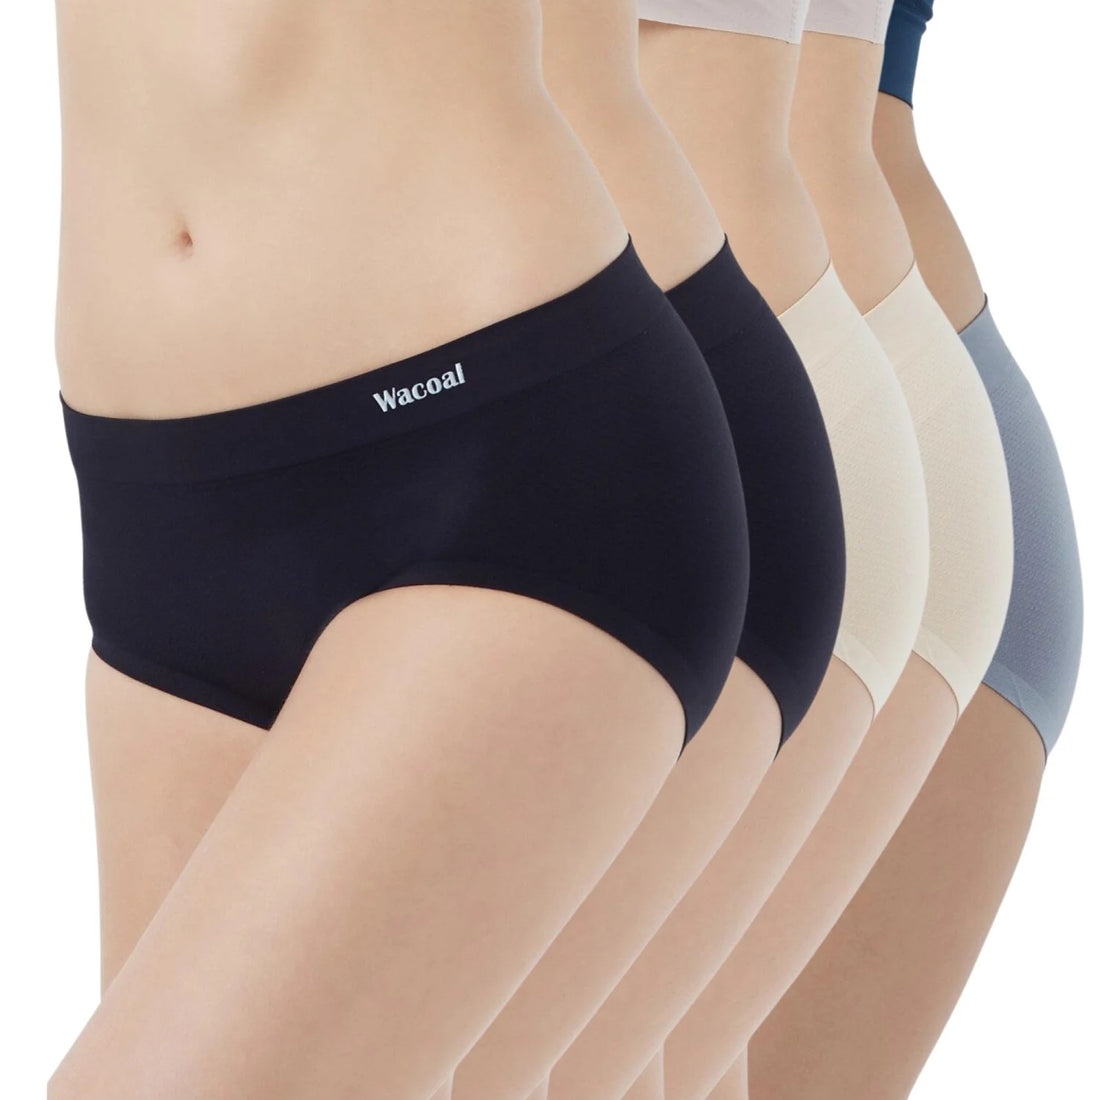 Wacoal Oh my nudes strapless panties Bikini pattern Set 5 pieces, model WU2F98, assorted colors (beige 2-black 2-grey 1)